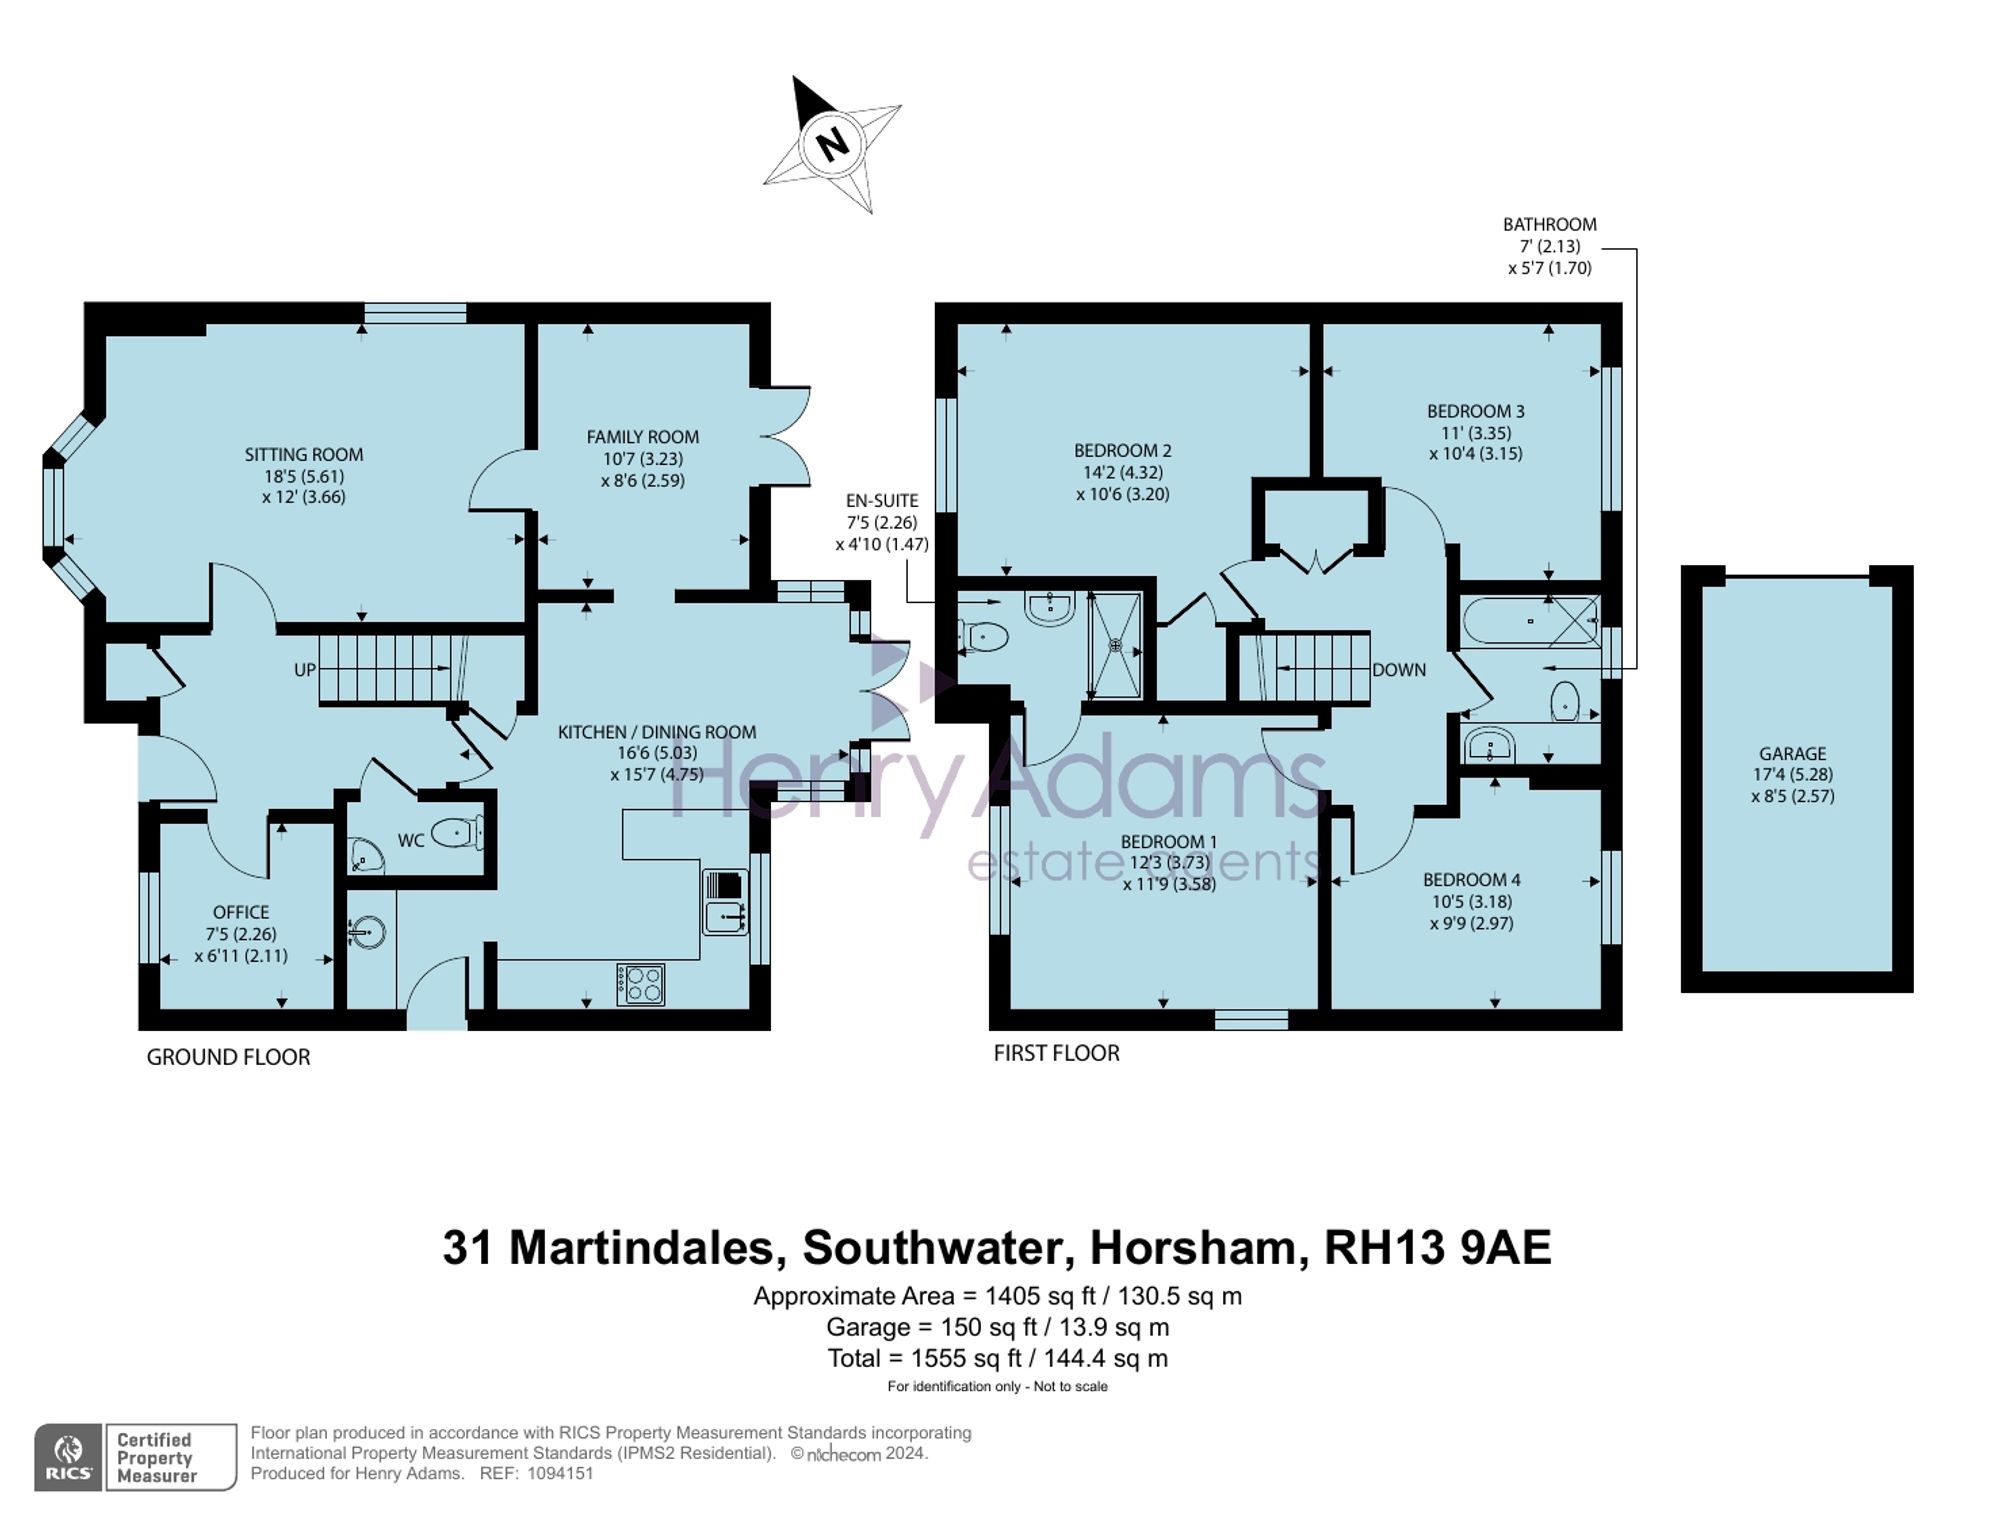 Martindales, Southwater, RH13 floorplans